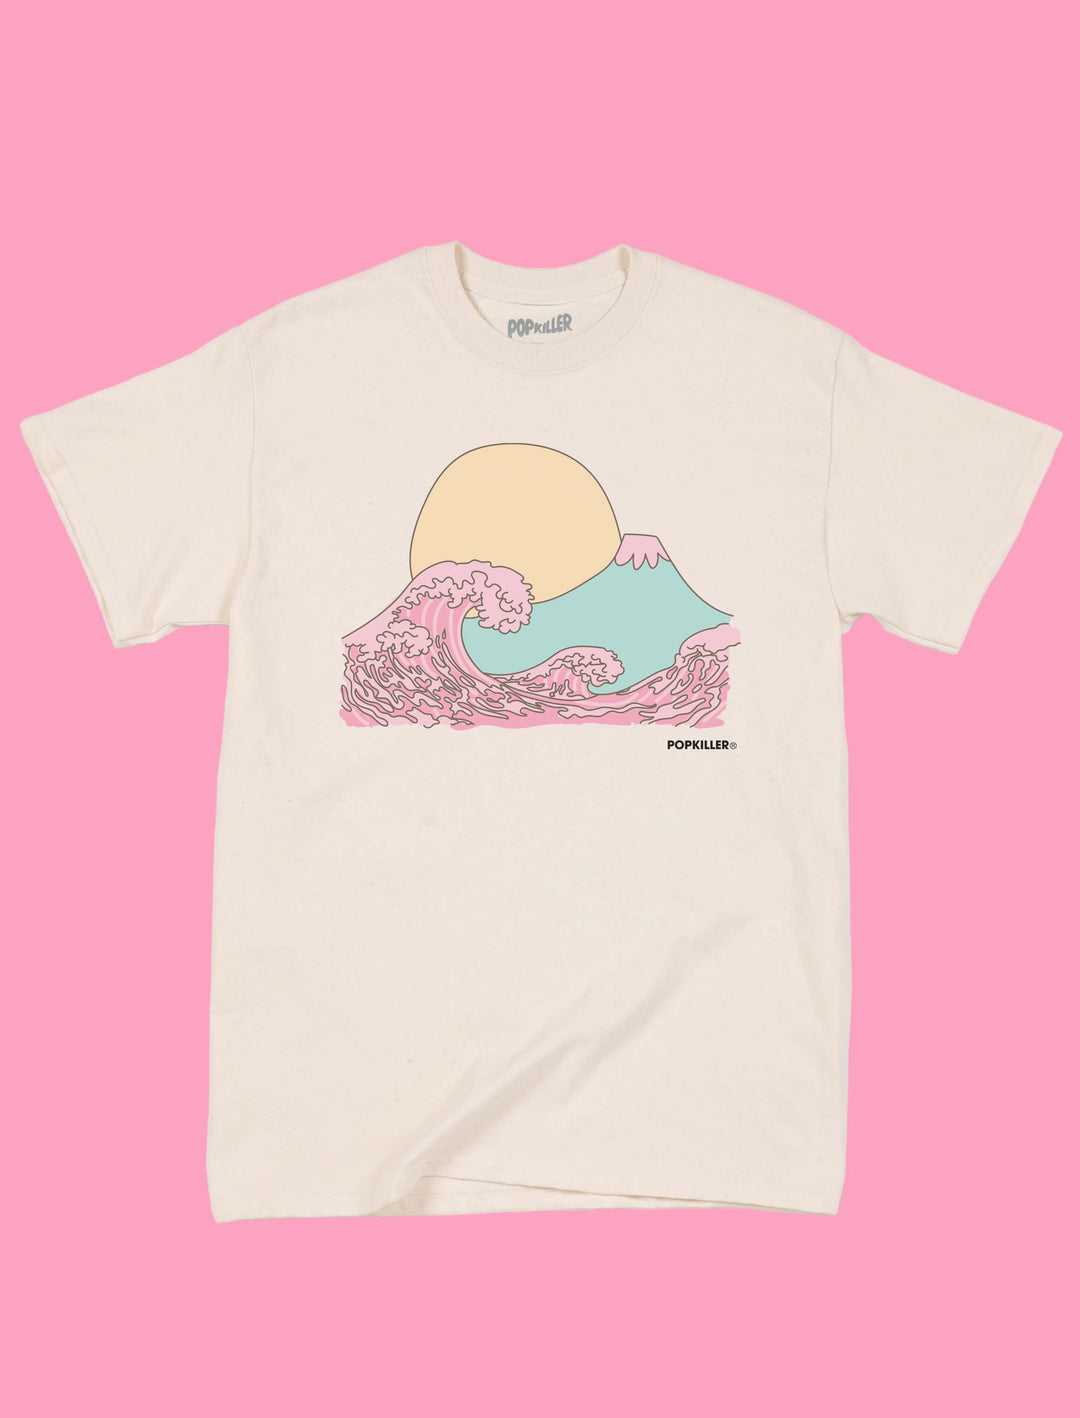 Pastel vaporwave Great Wave Mt. Fuji graphic t-shirt.